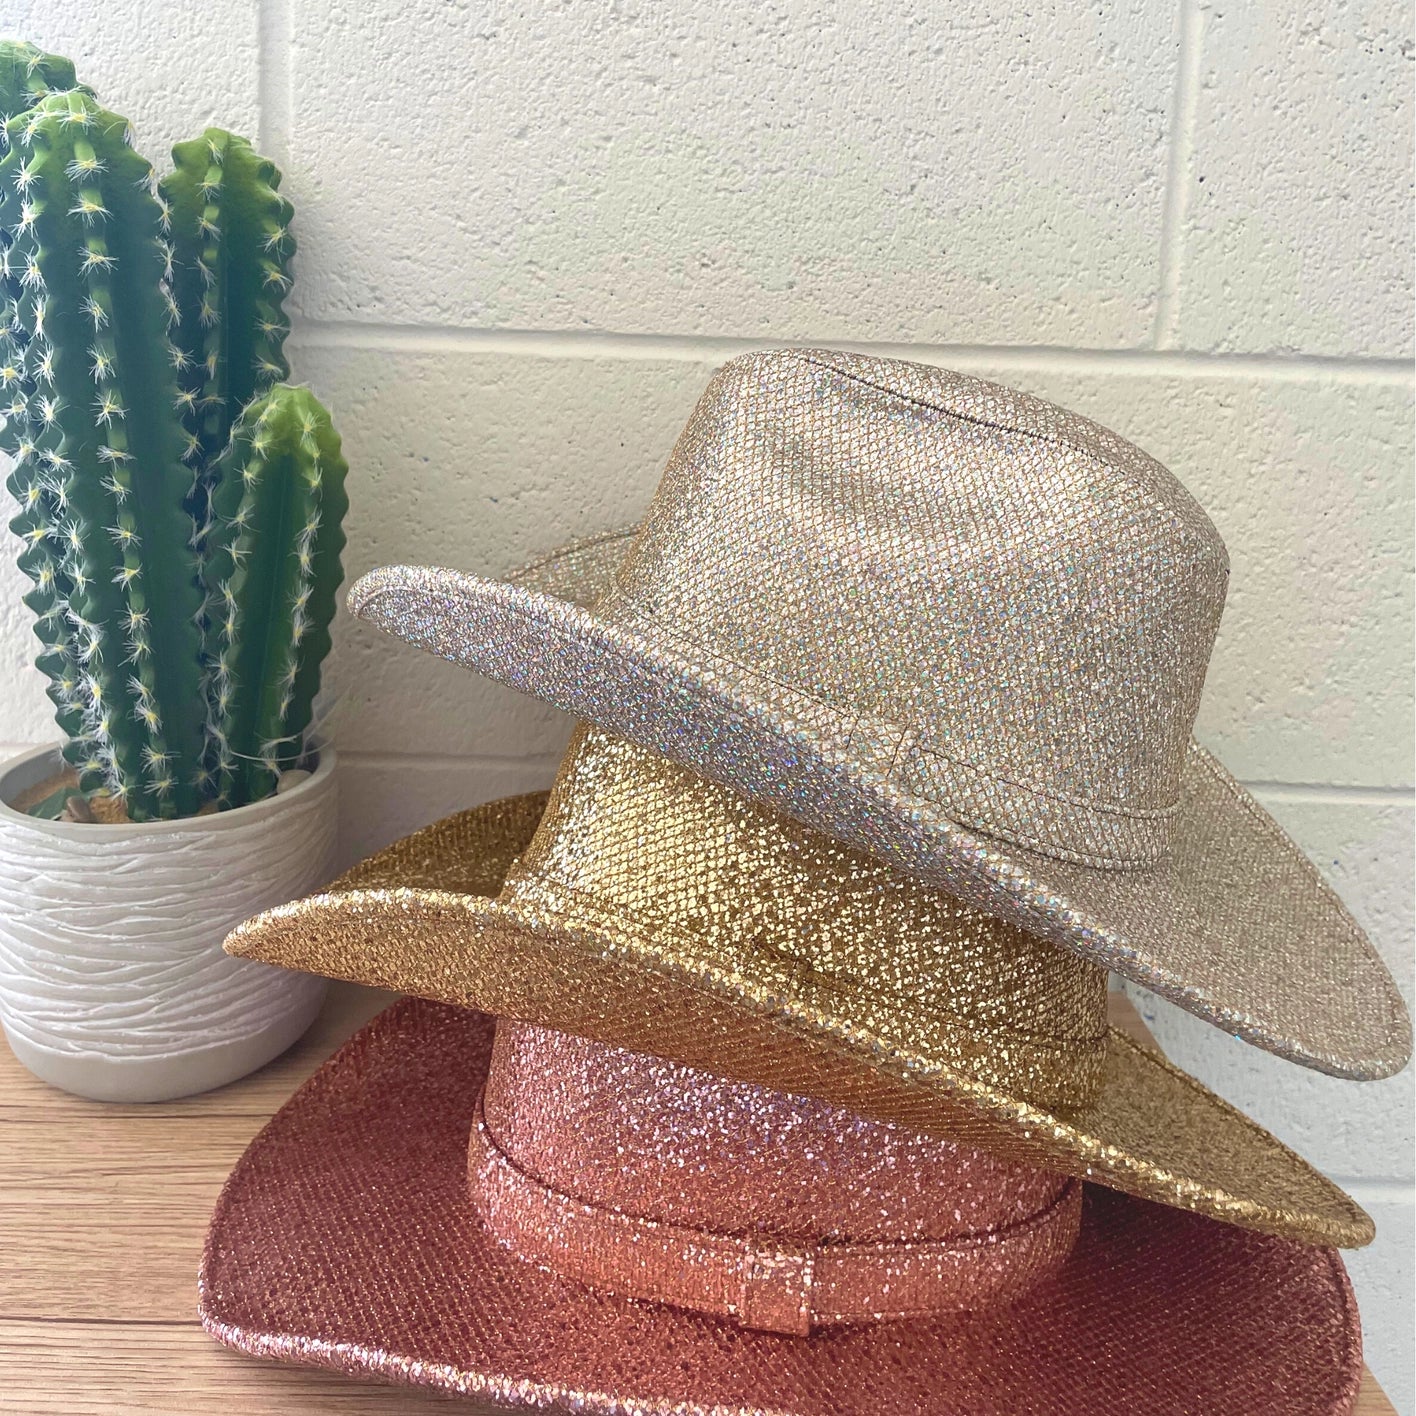 Unisex Glitter Glam cowboy hat - Las Ofrendas 